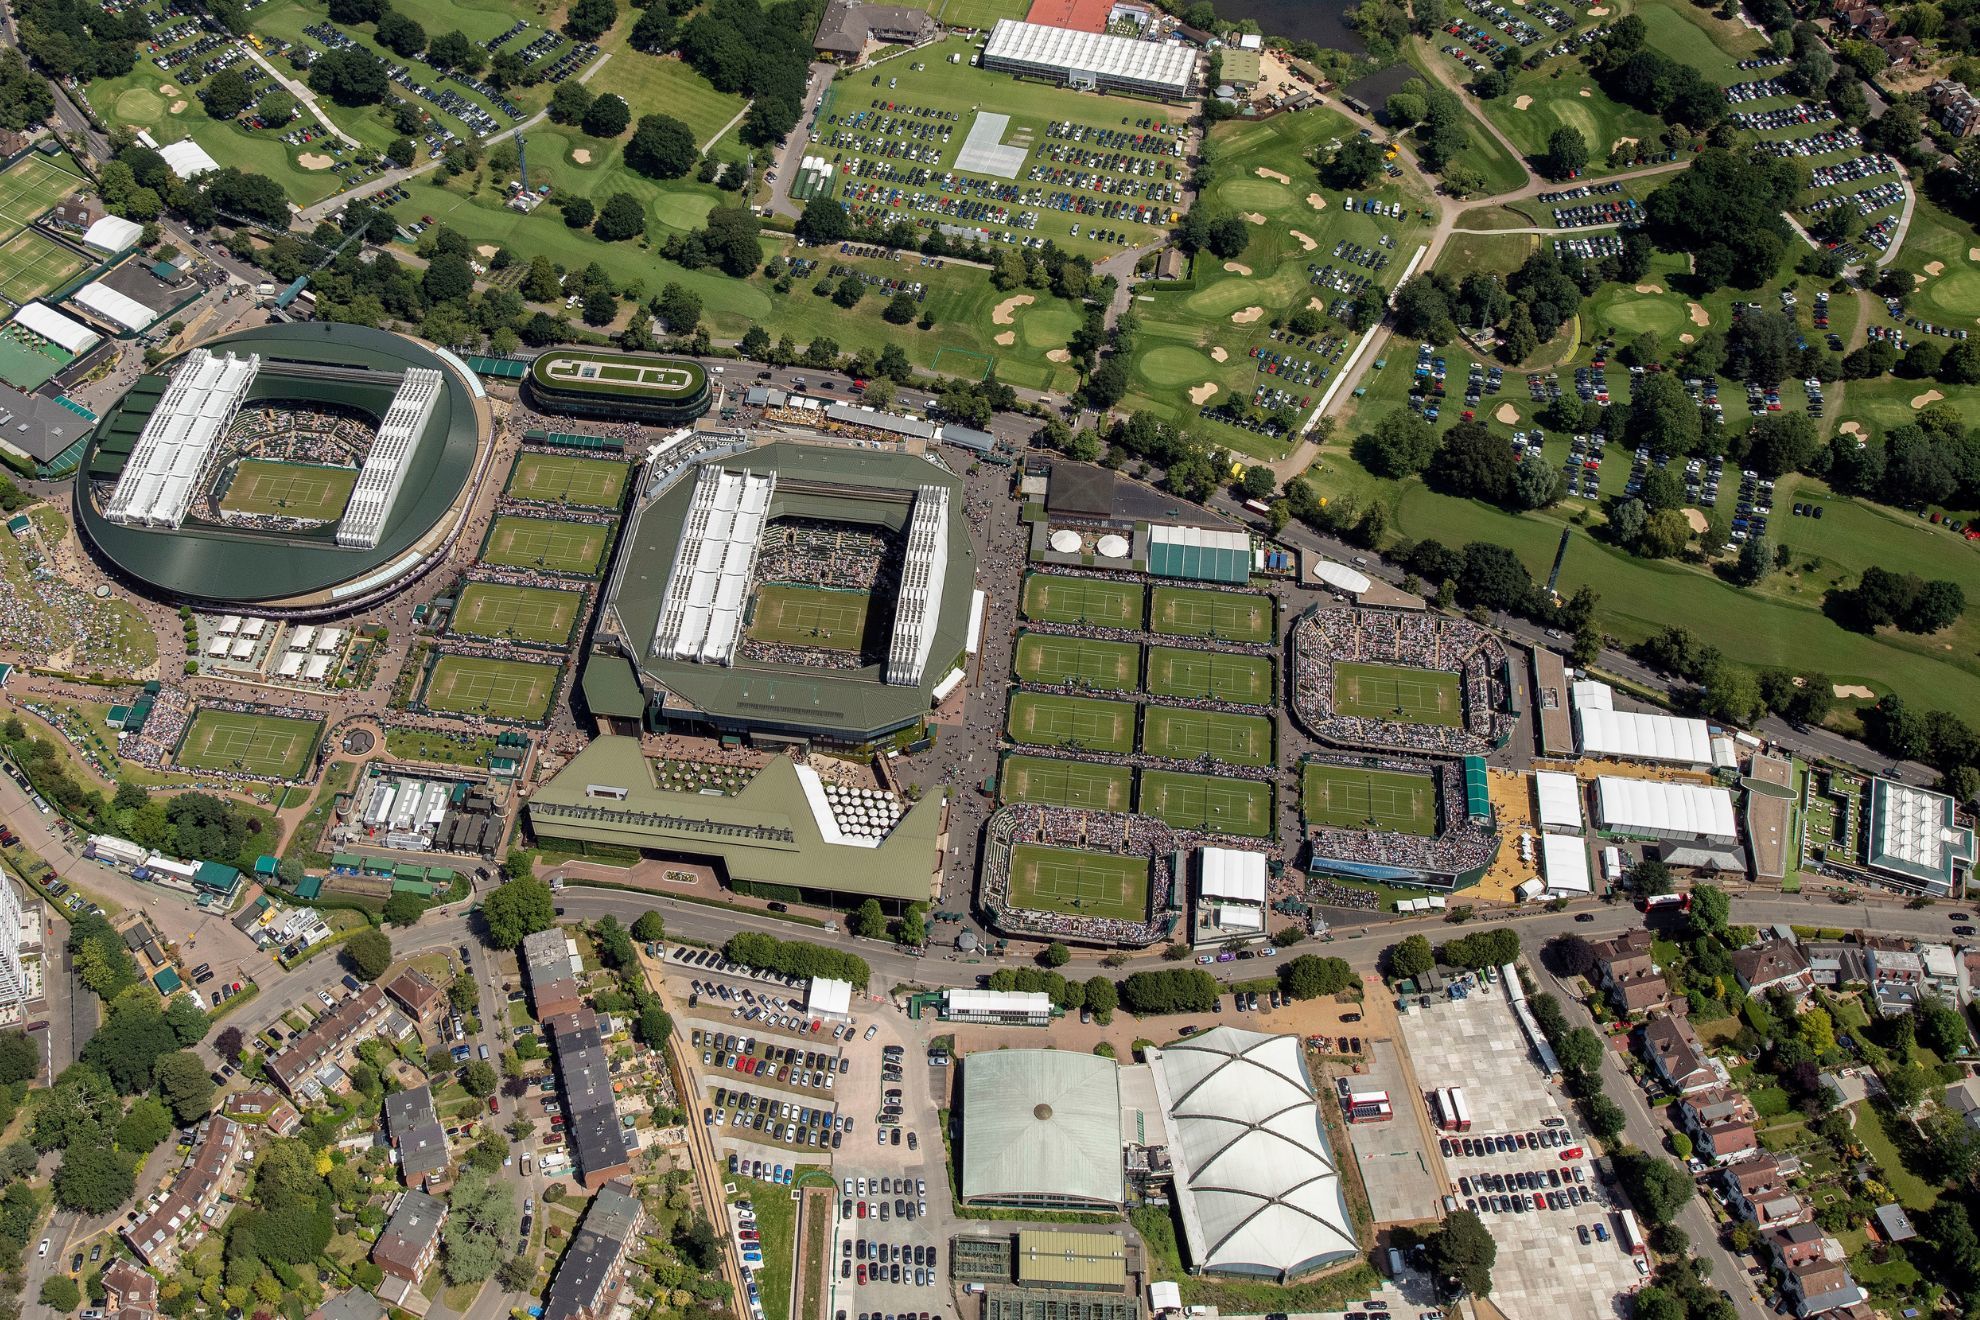 An aerial view of All England Tennis Club